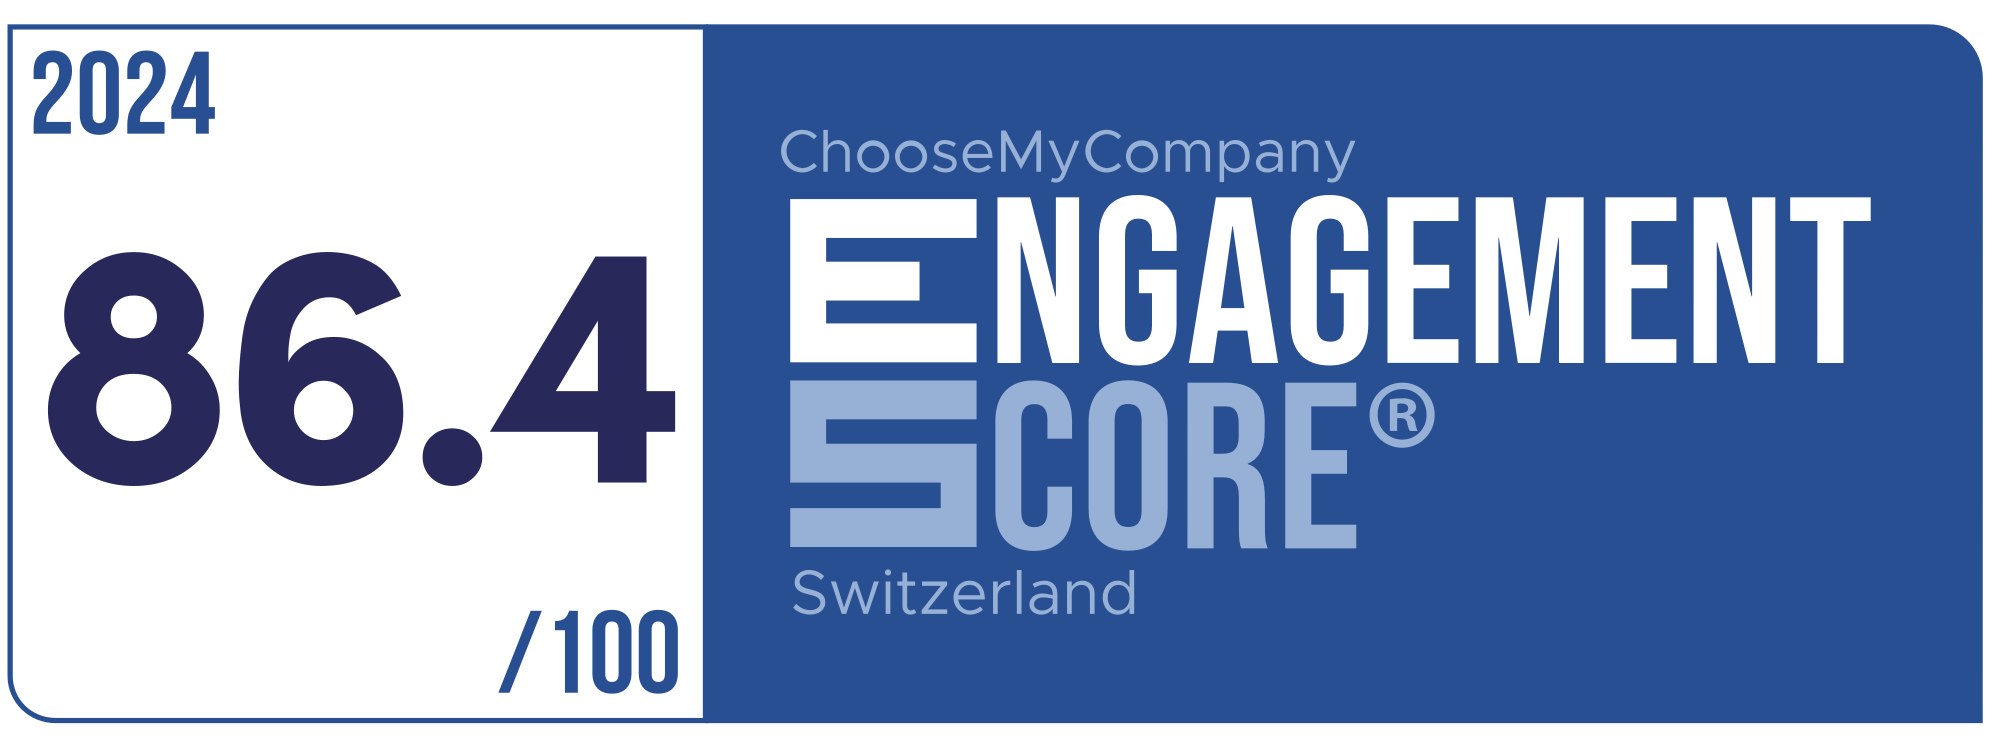 Label Engagement Score 2024 Switzerland